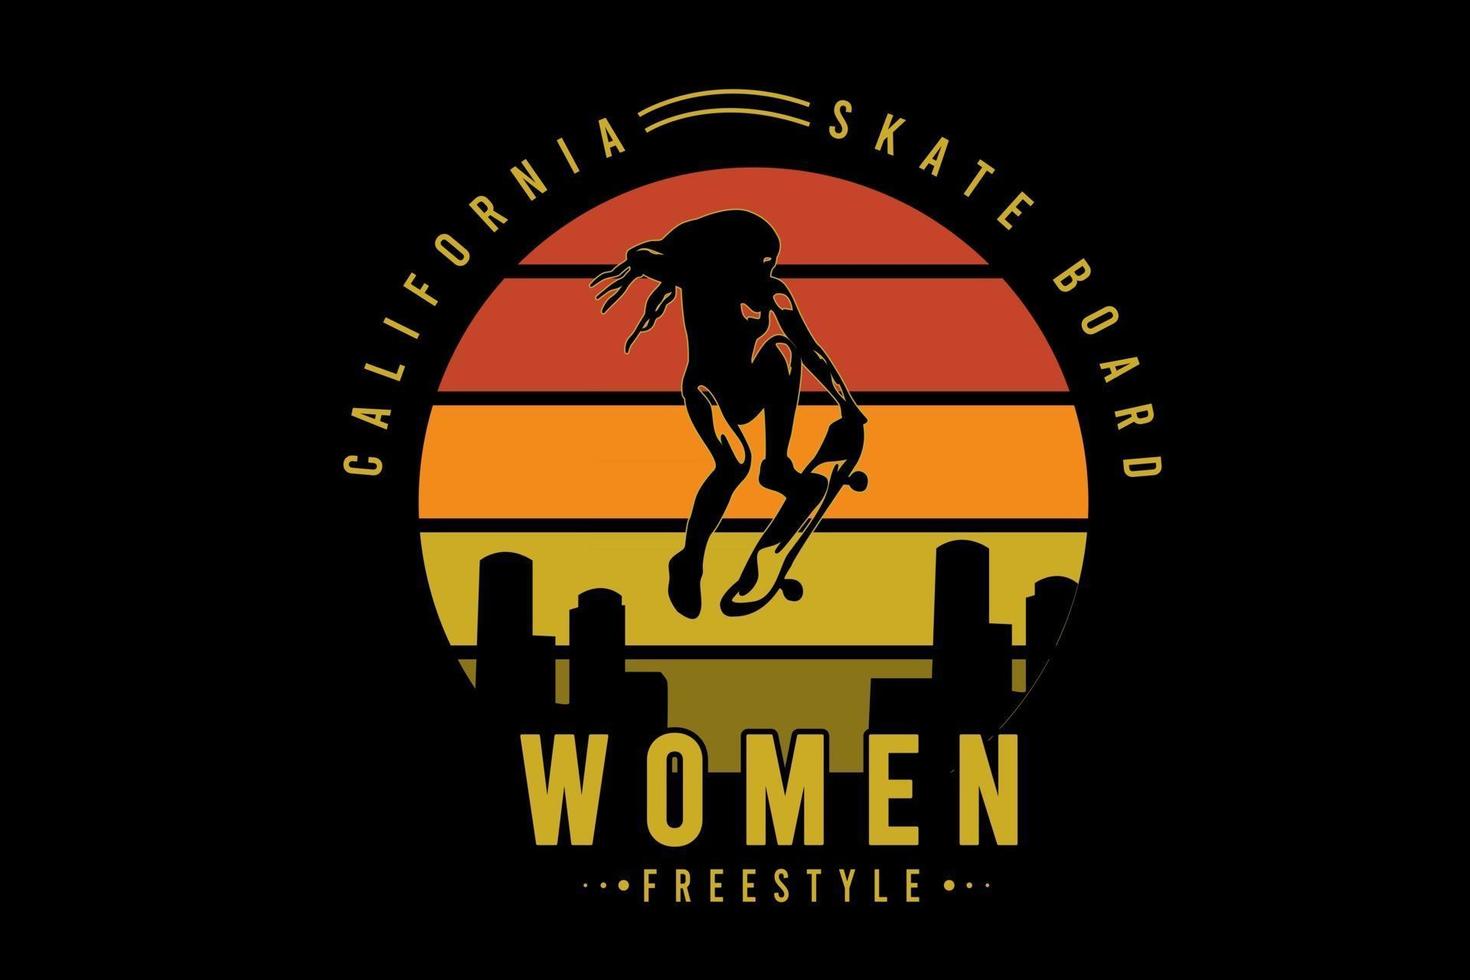 california skateboard mujeres freestyle color naranja y amarillo vector